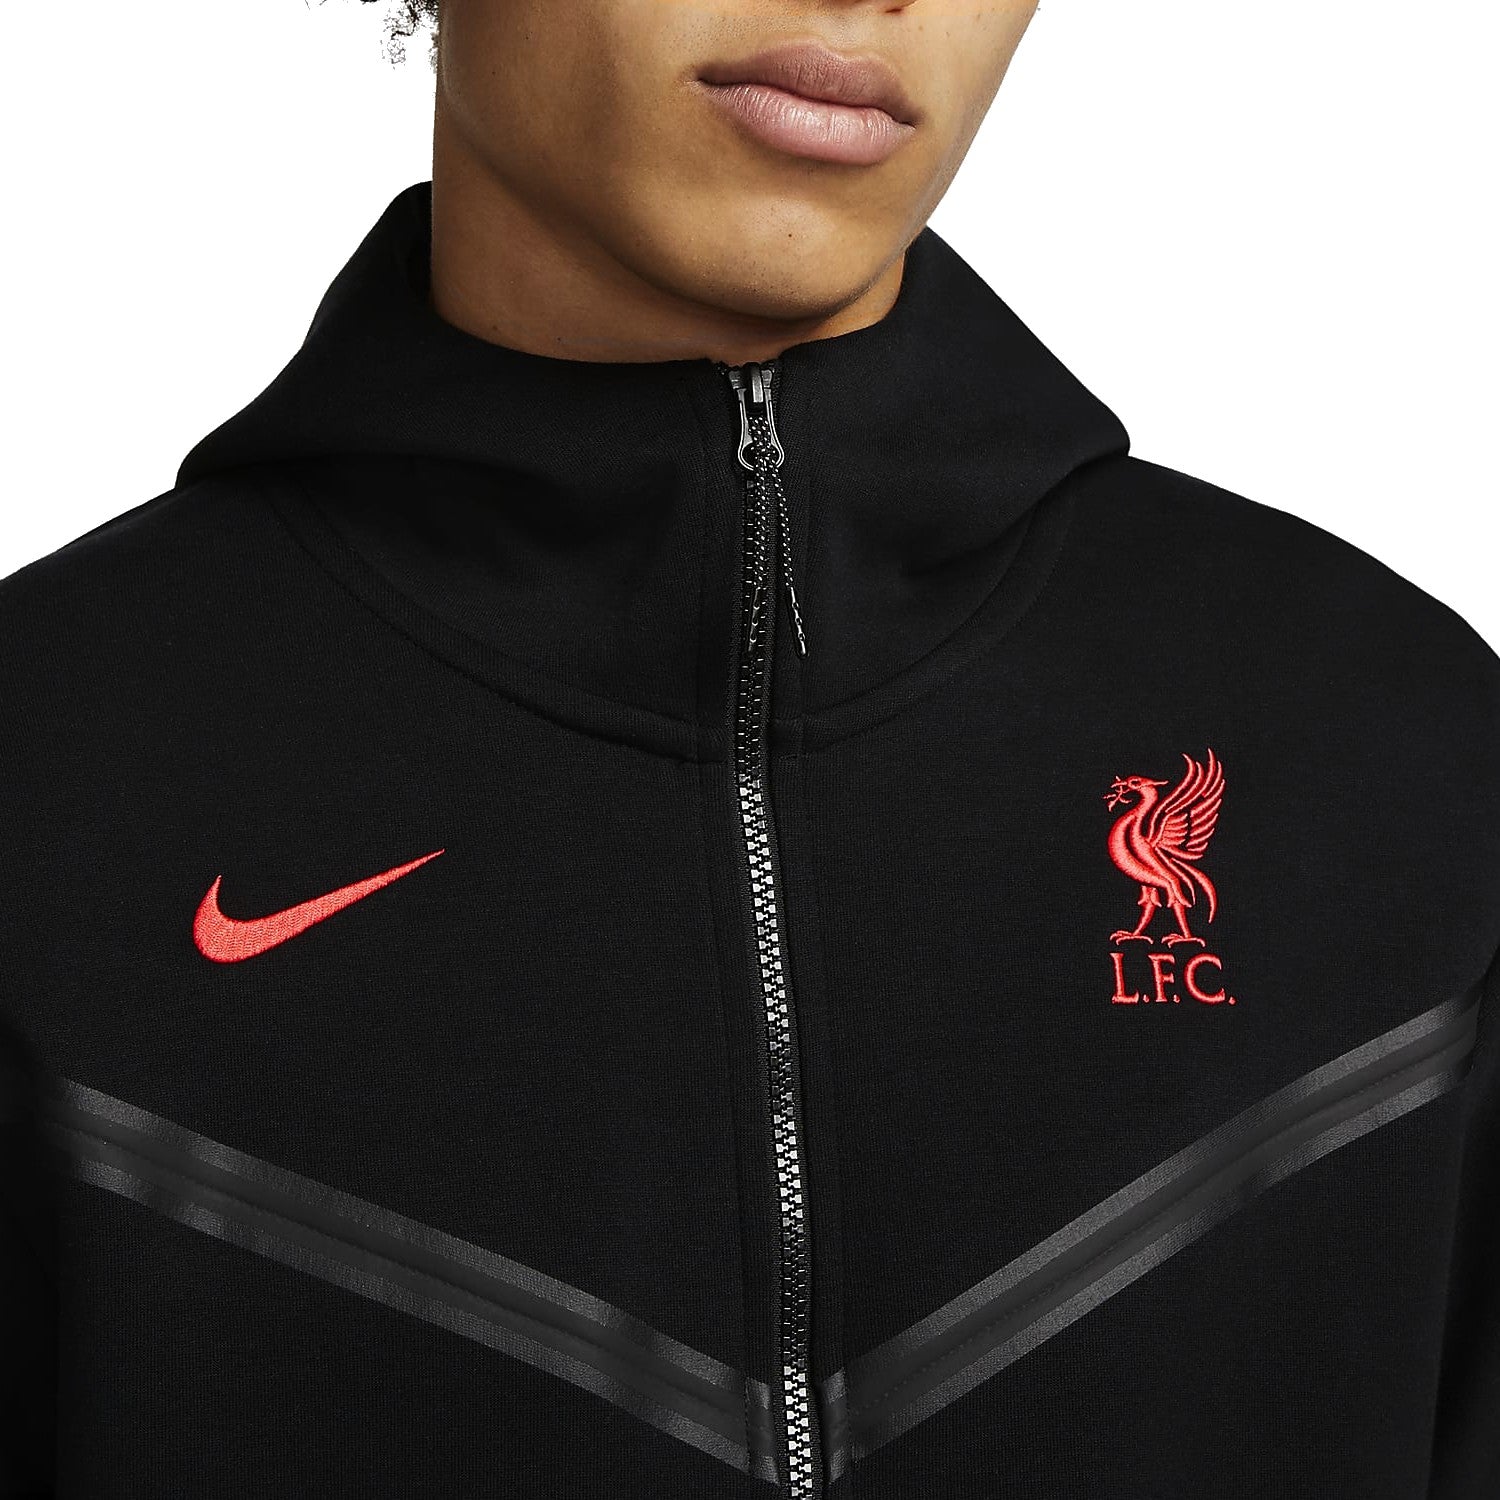 Opsplitsen Ambassade sieraden Liverpool FC black Tech fleece presentation soccer jacket 2022/23 - Nike –  SoccerTracksuits.com